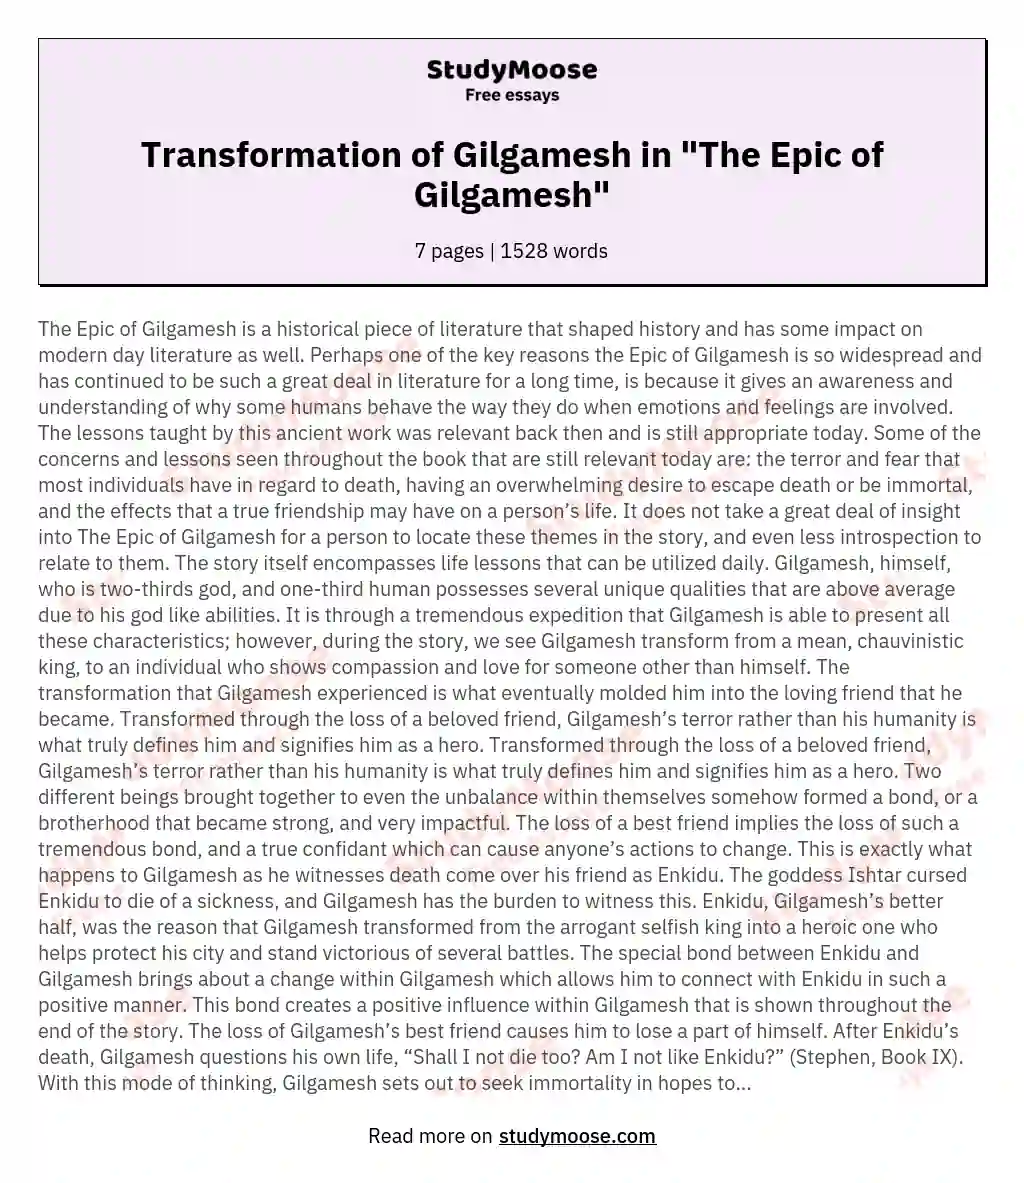 Transformation of Gilgamesh in "The Epic of Gilgamesh"